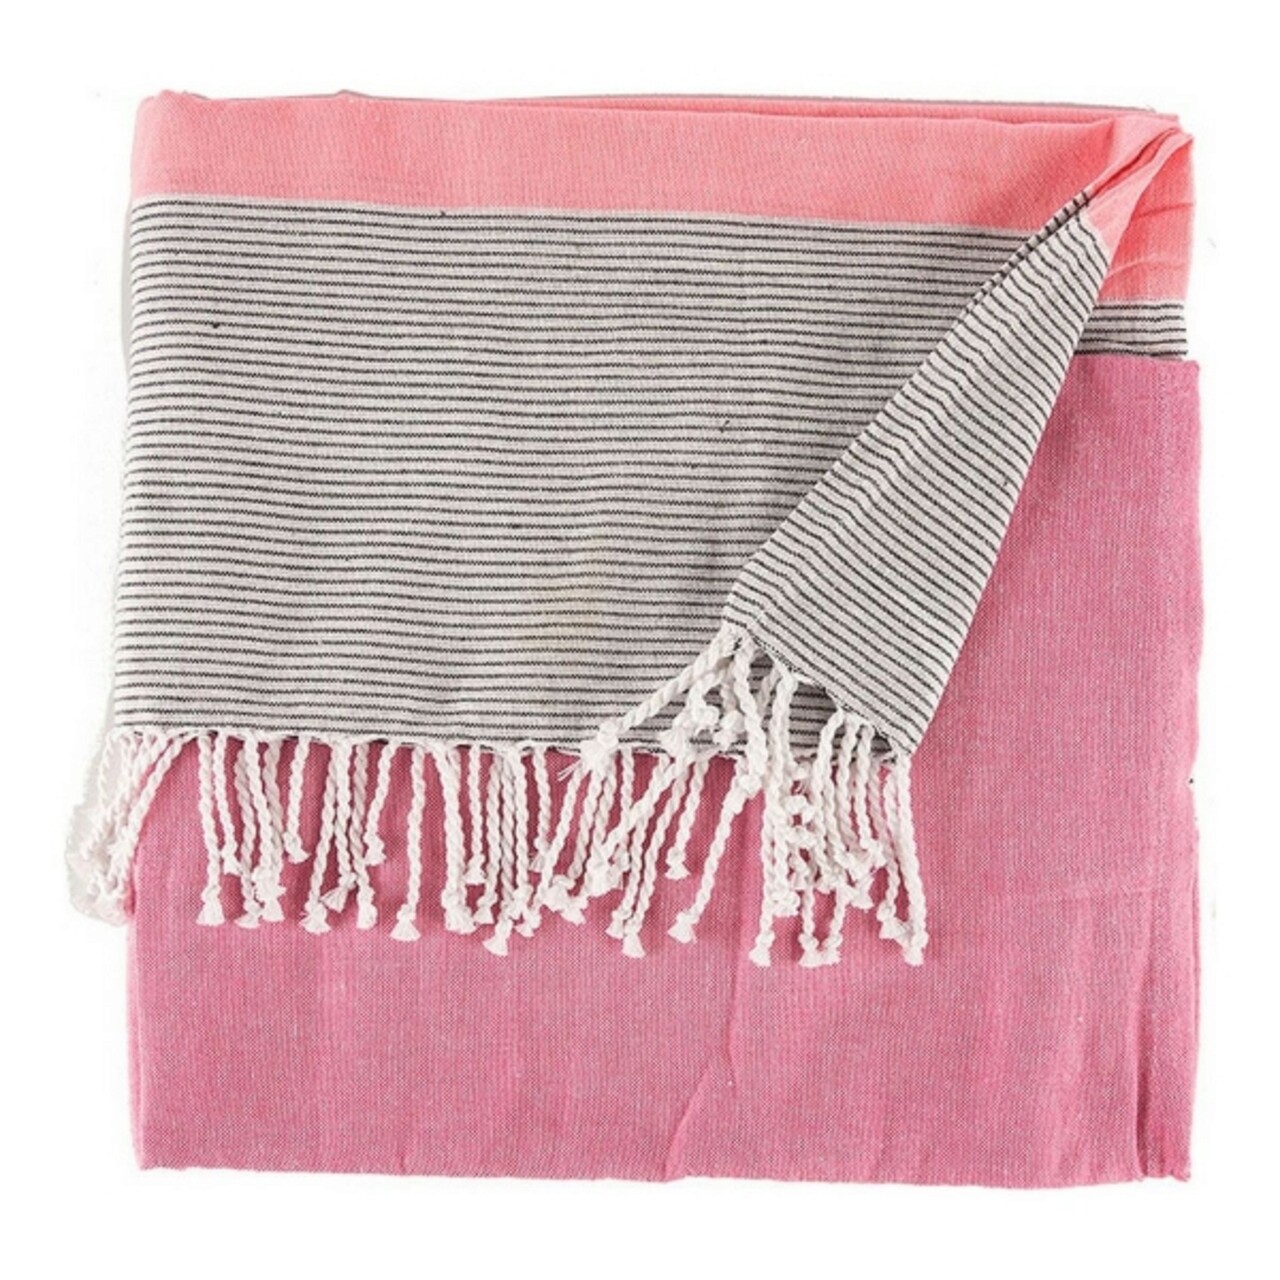 Patura / Pled Stripes, Gift Decor, 160 x 200 cm, 100% bumbac, roz